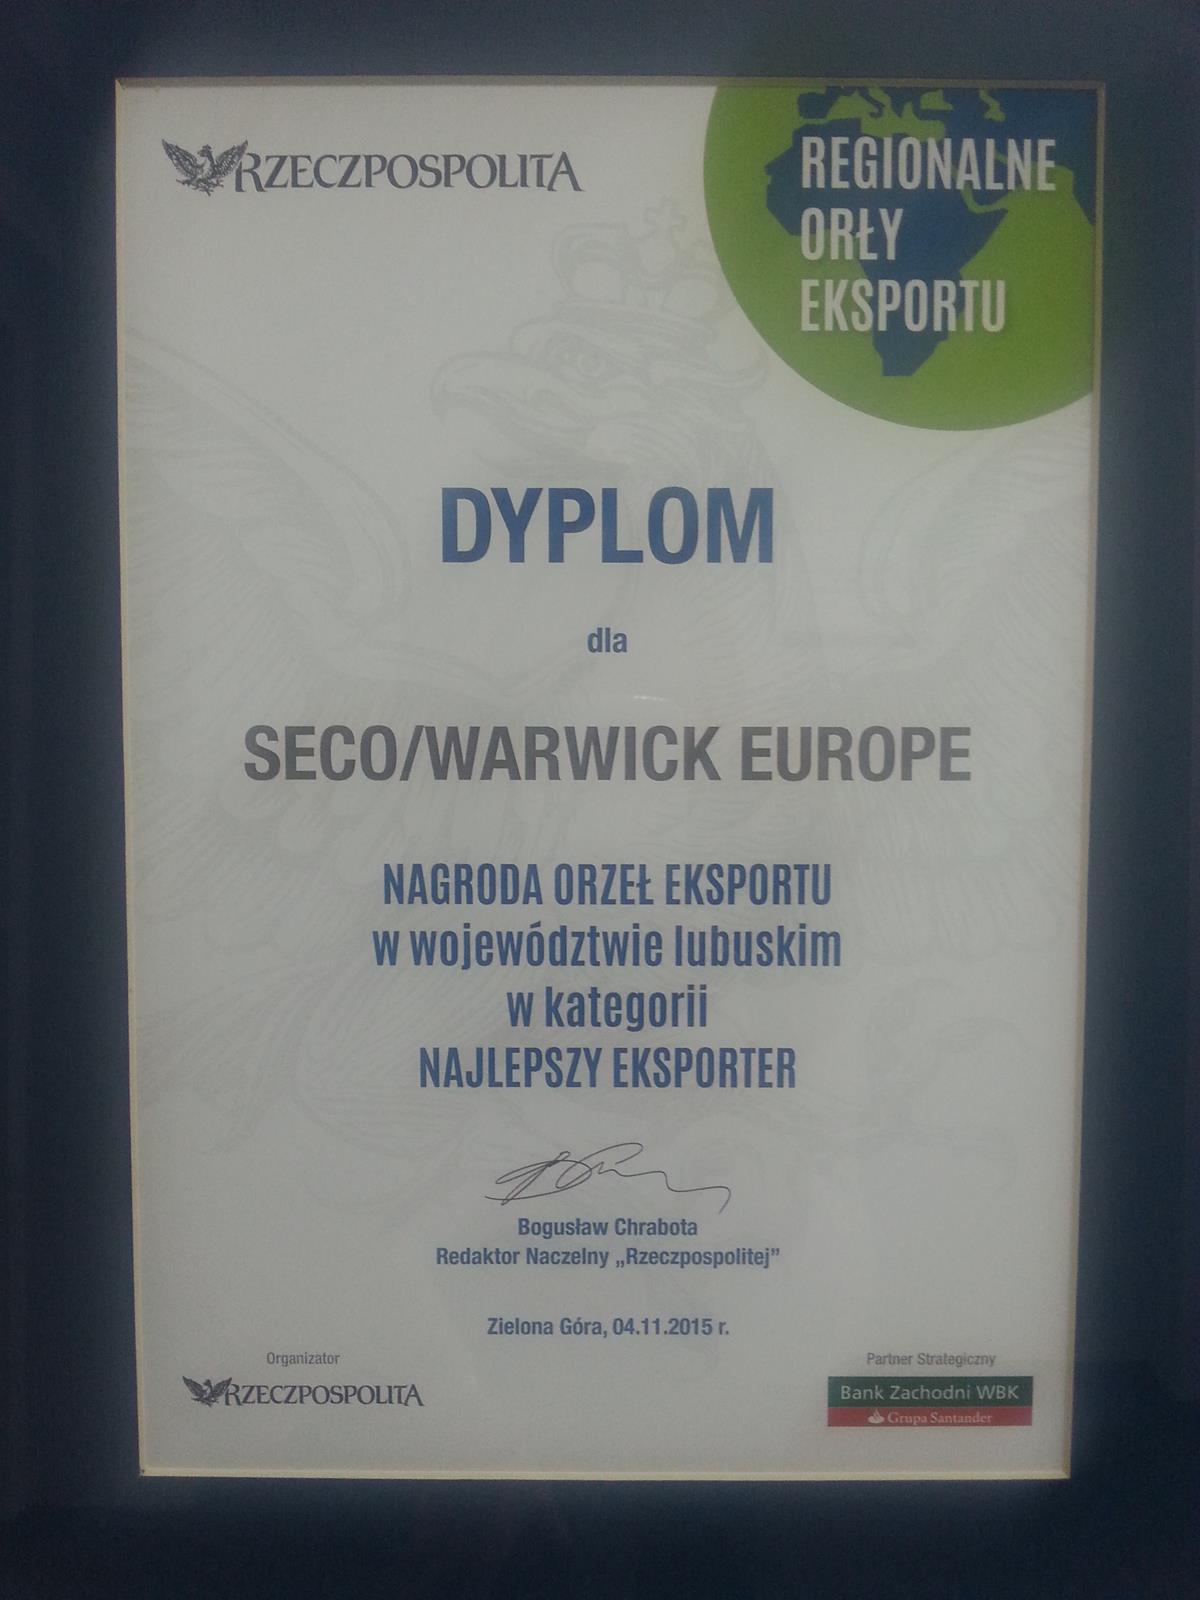 SECOWARWICK awarded the „Export Eagle”of “Rzeczpospolita” prize